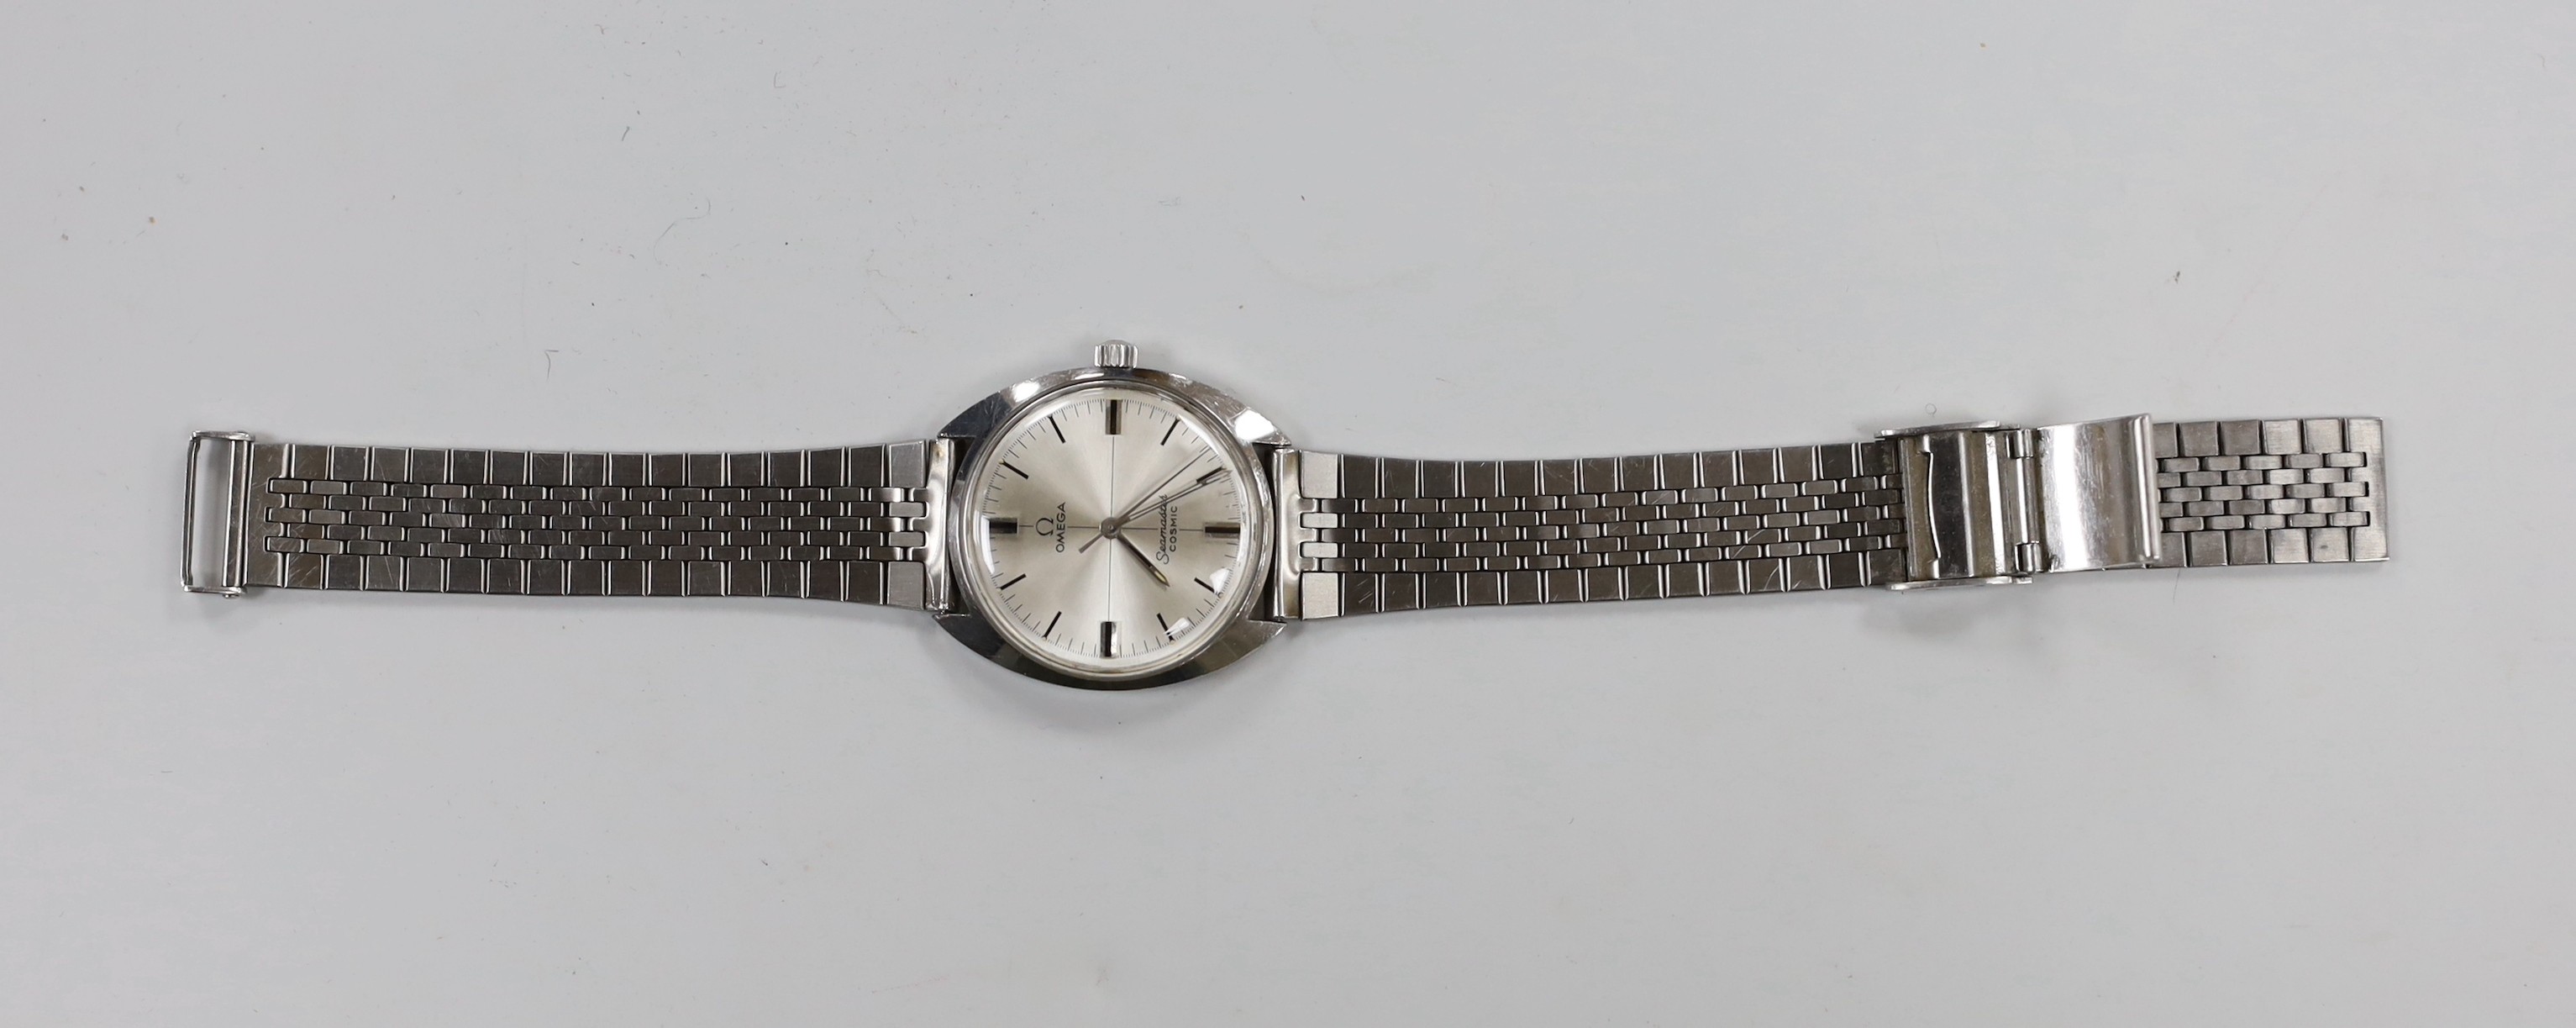 A gentleman's 1970's? stainless steel Omega Seamaster Cosmic manual wind wrist watch, on associated bracelet, case diameter 34mm.